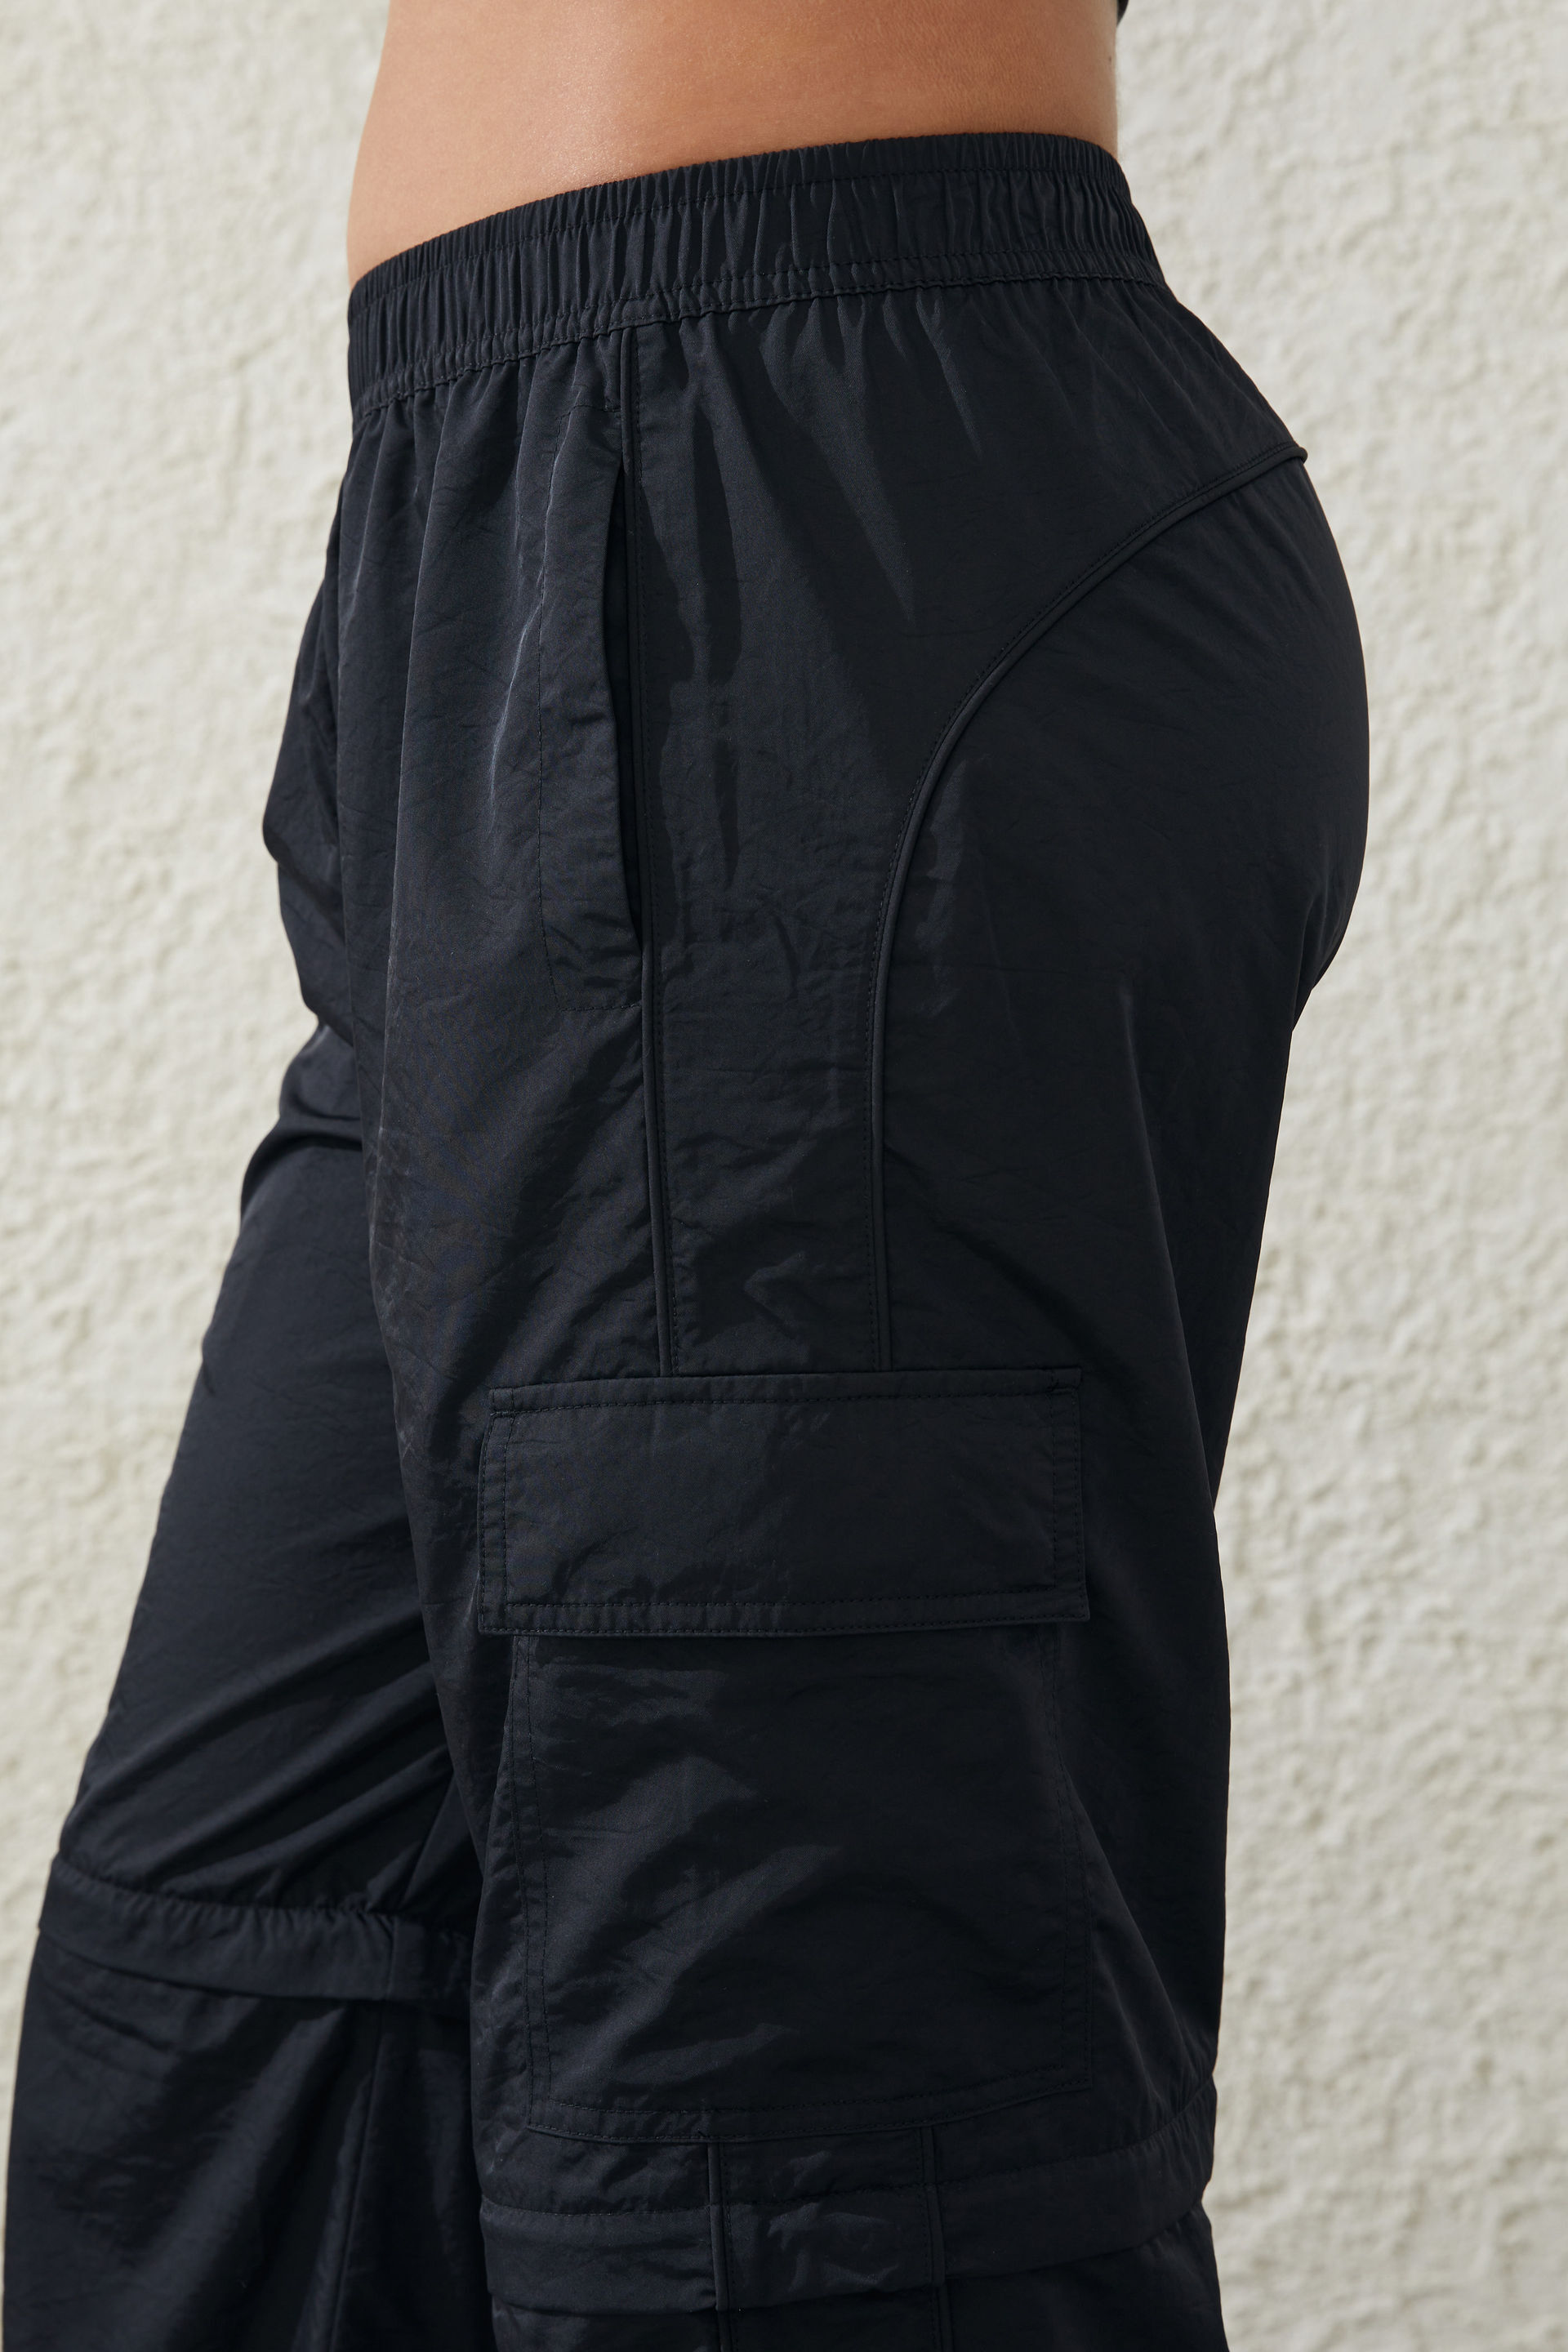 تسوق (Army Green)Hip Hop Joggers Cargo Pants Black Pocket Multi-Pocket  Track Pants Male Trousers Streetwear Casual Elastic Waist Cargo Pants ACU  اونلاين | جوميا مصر